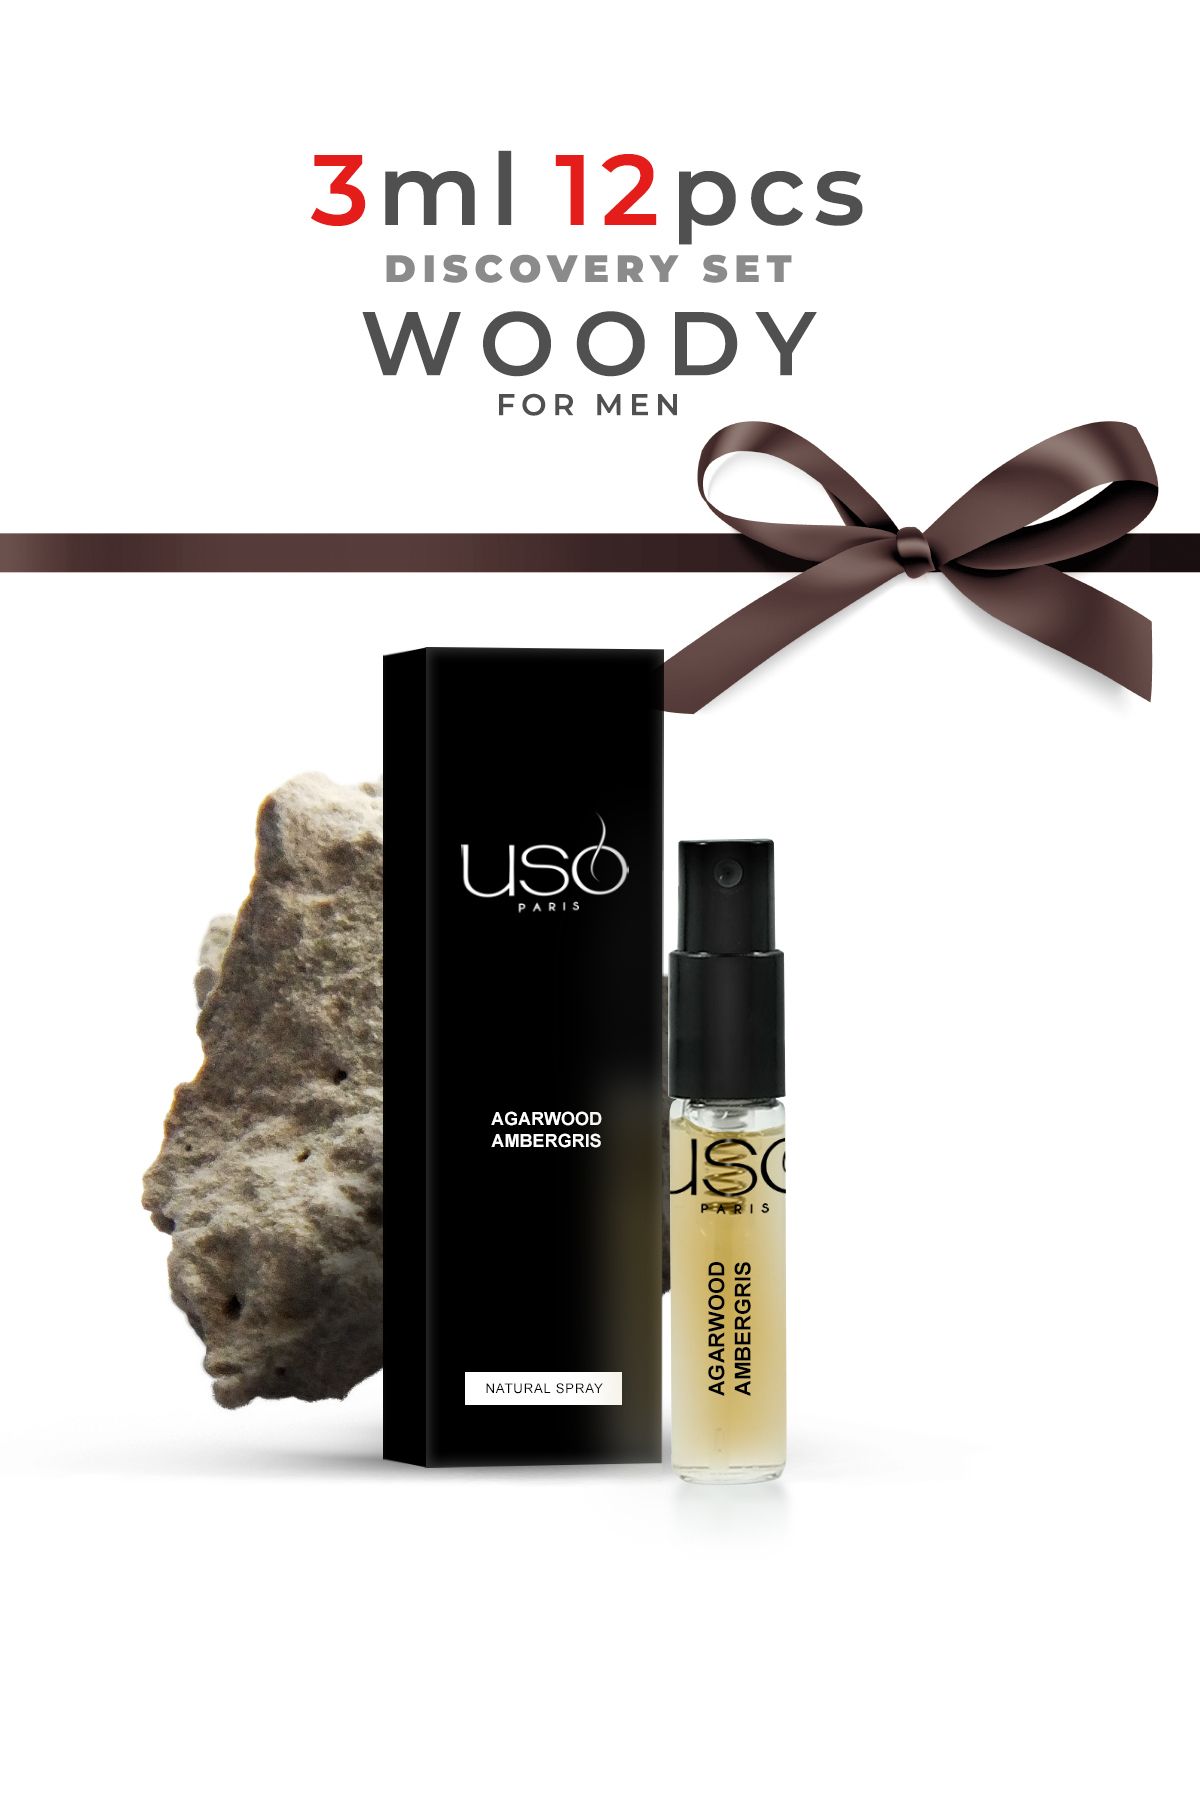 USO Woody Parfum Discovery Set 3ml X 12 Pcs Men